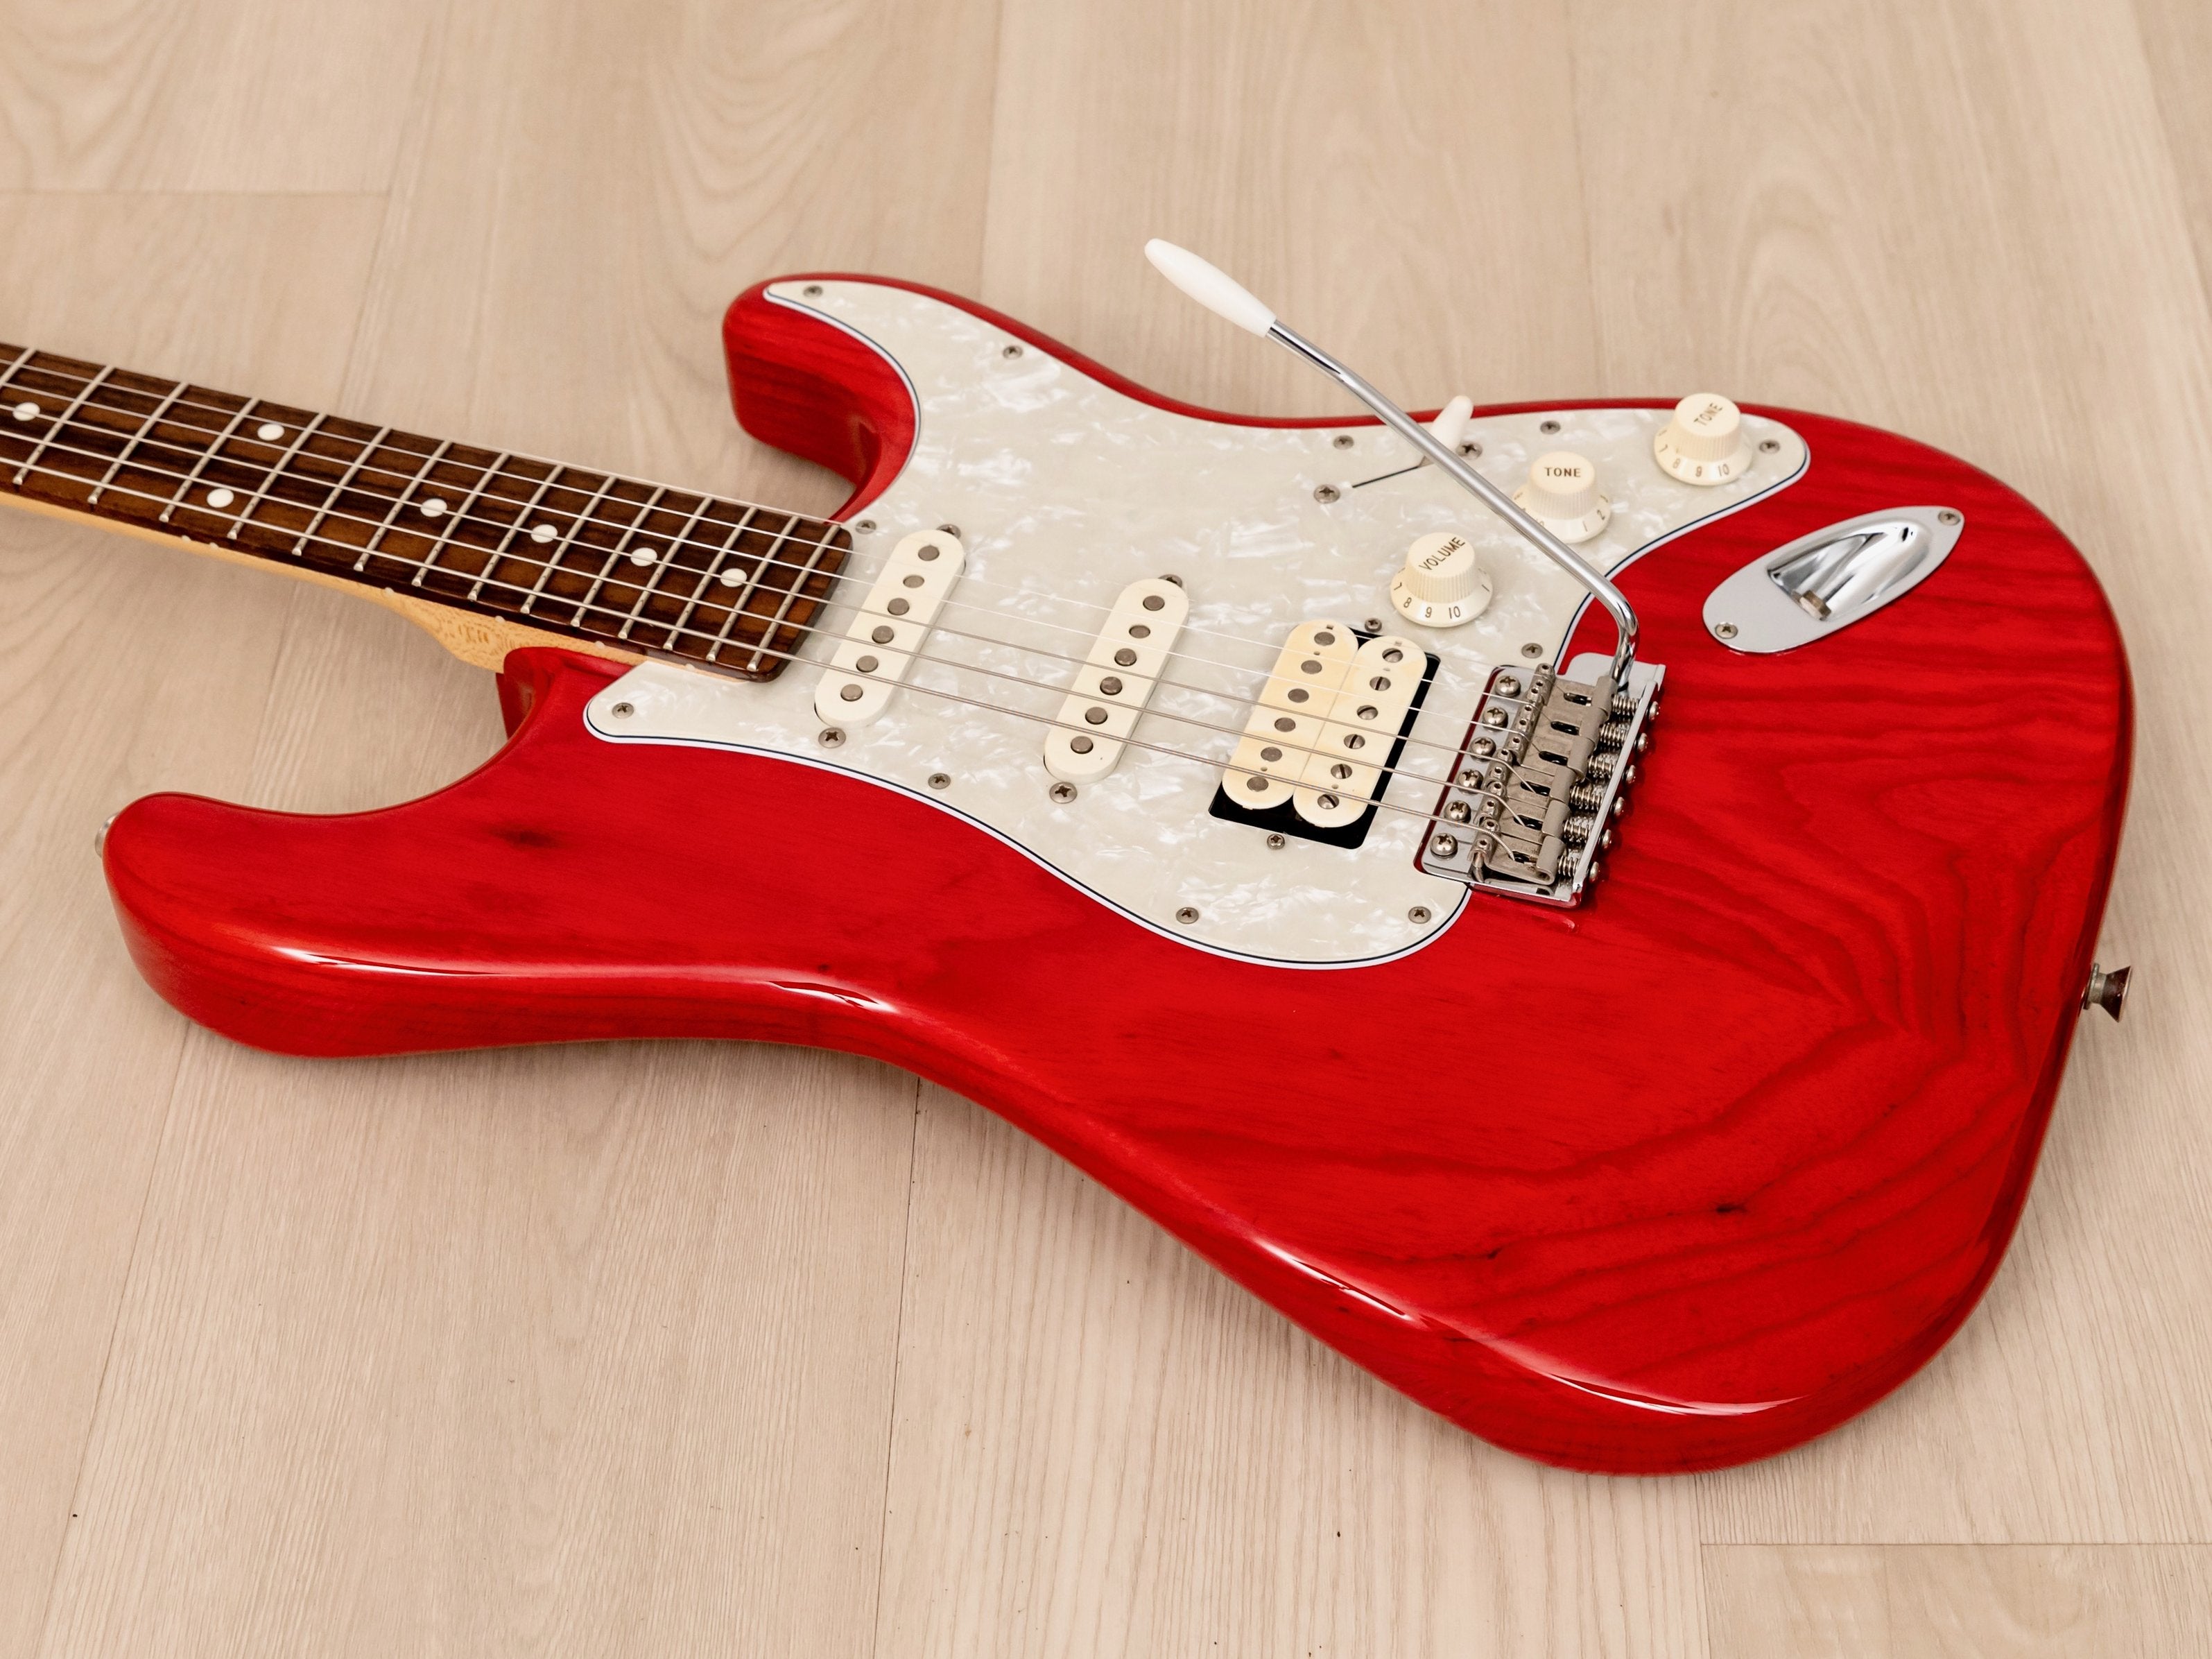 2012 Fender Stratocaster ST62-ASH MH Trans Red SSH w/ Hangtags, Japan MIJ